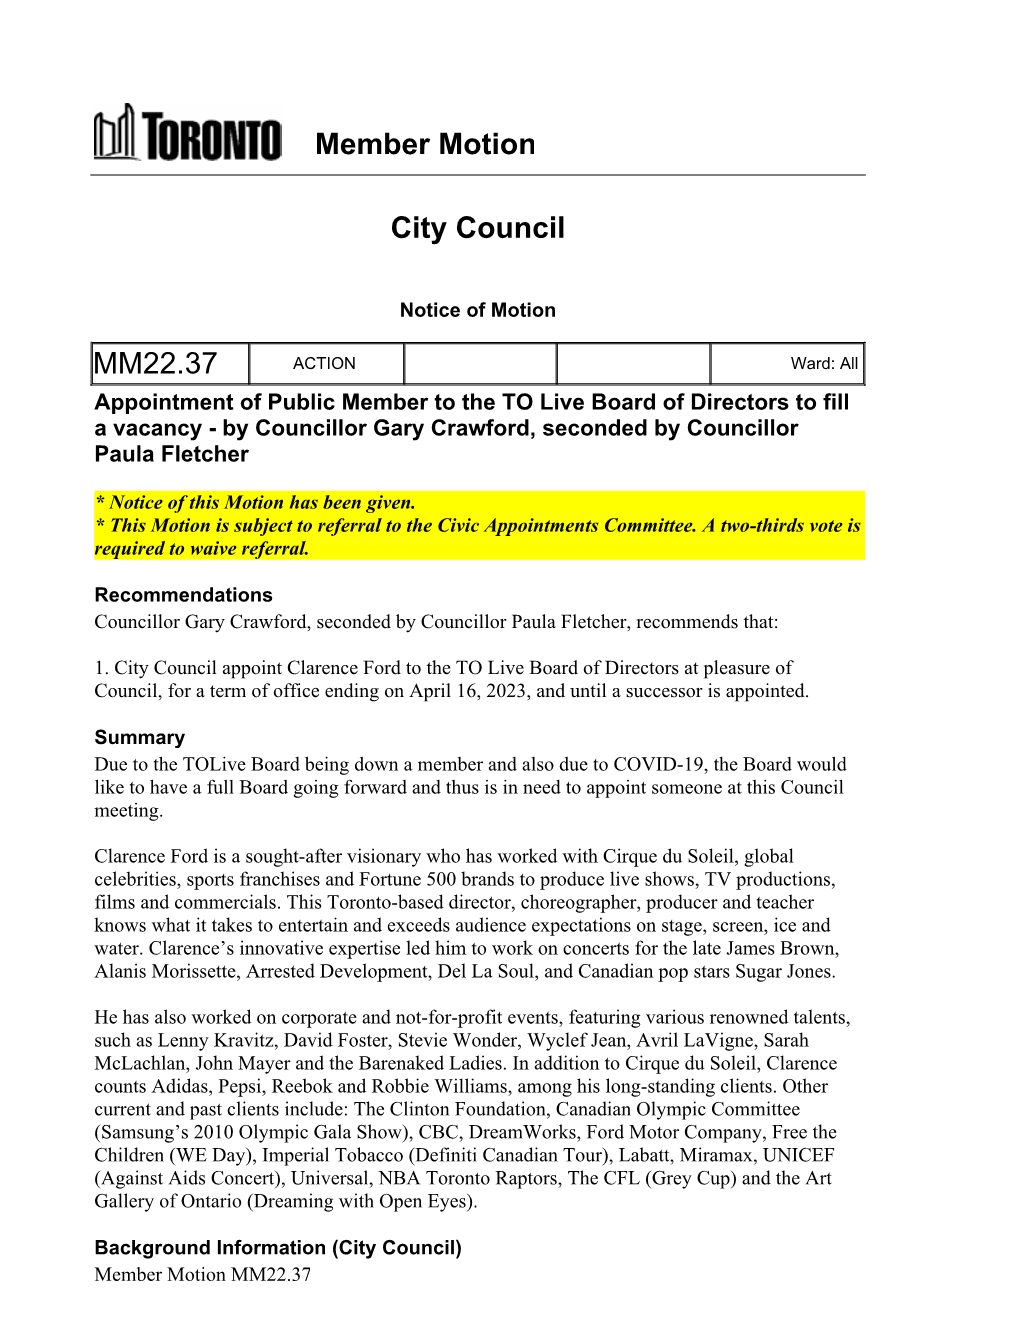 Member Motion City Council MM22.37